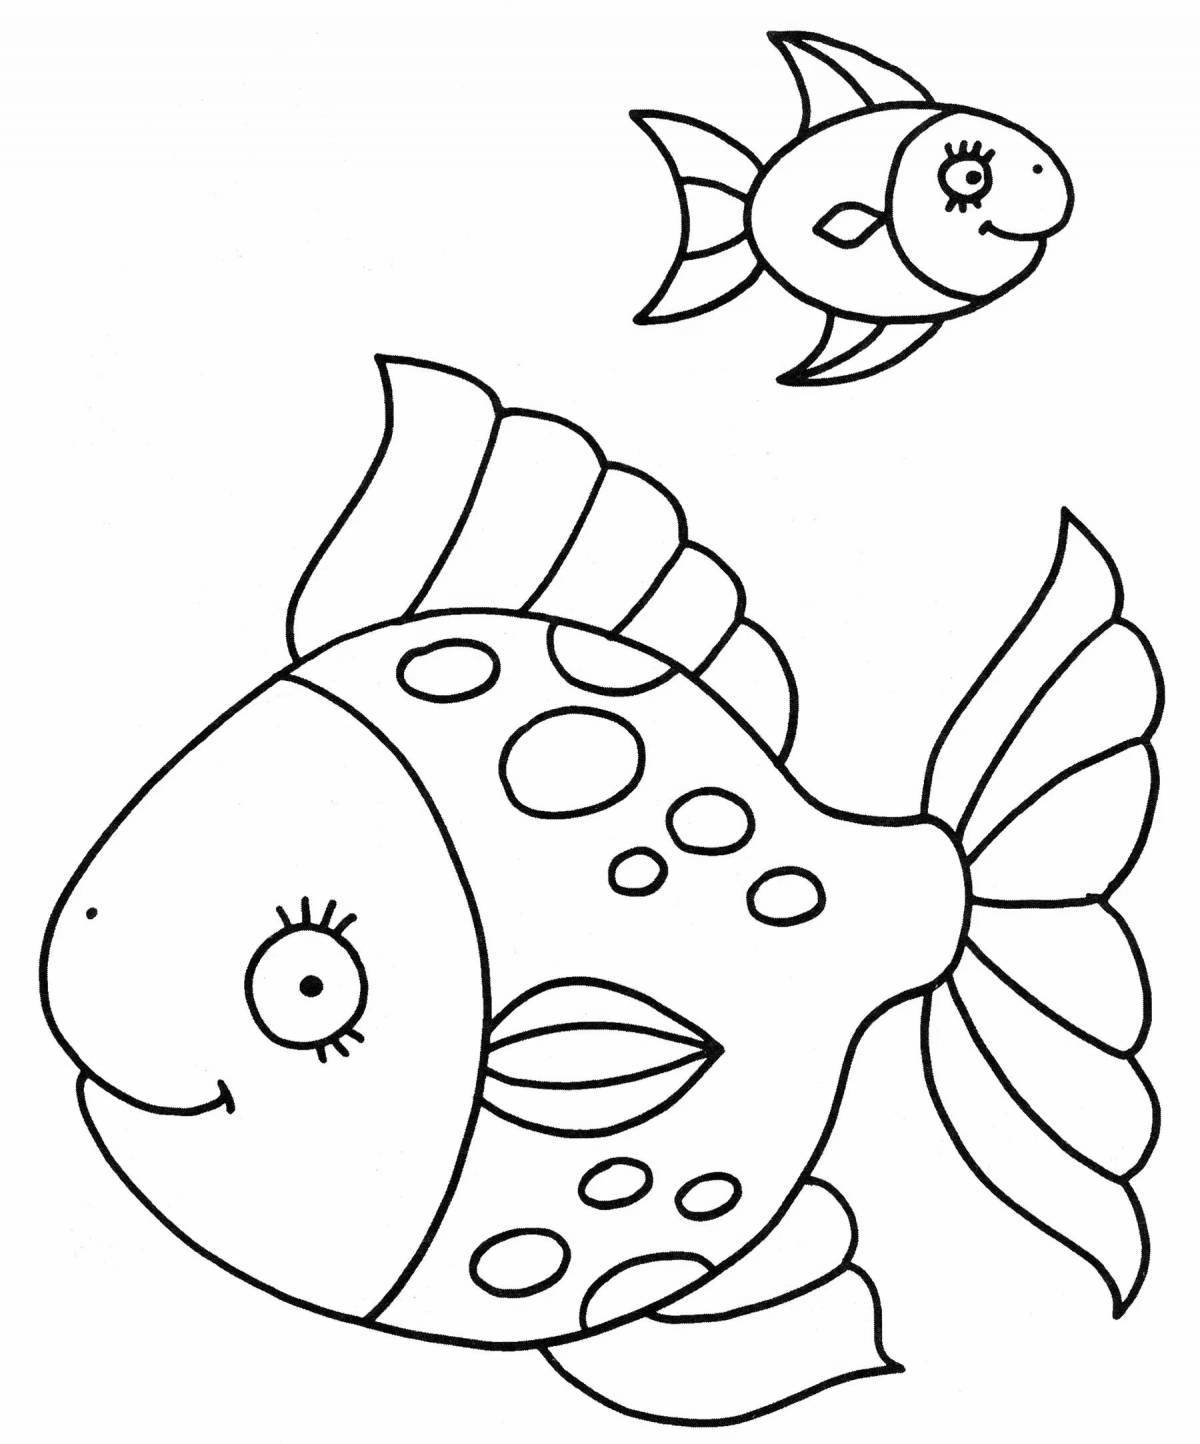 Раскраски рыбки для детей 3 4. Раскраска рыбка. Рыбка раскраска для детей. Рыба раскраска для детей. Аквариумные рыбки раскраска.